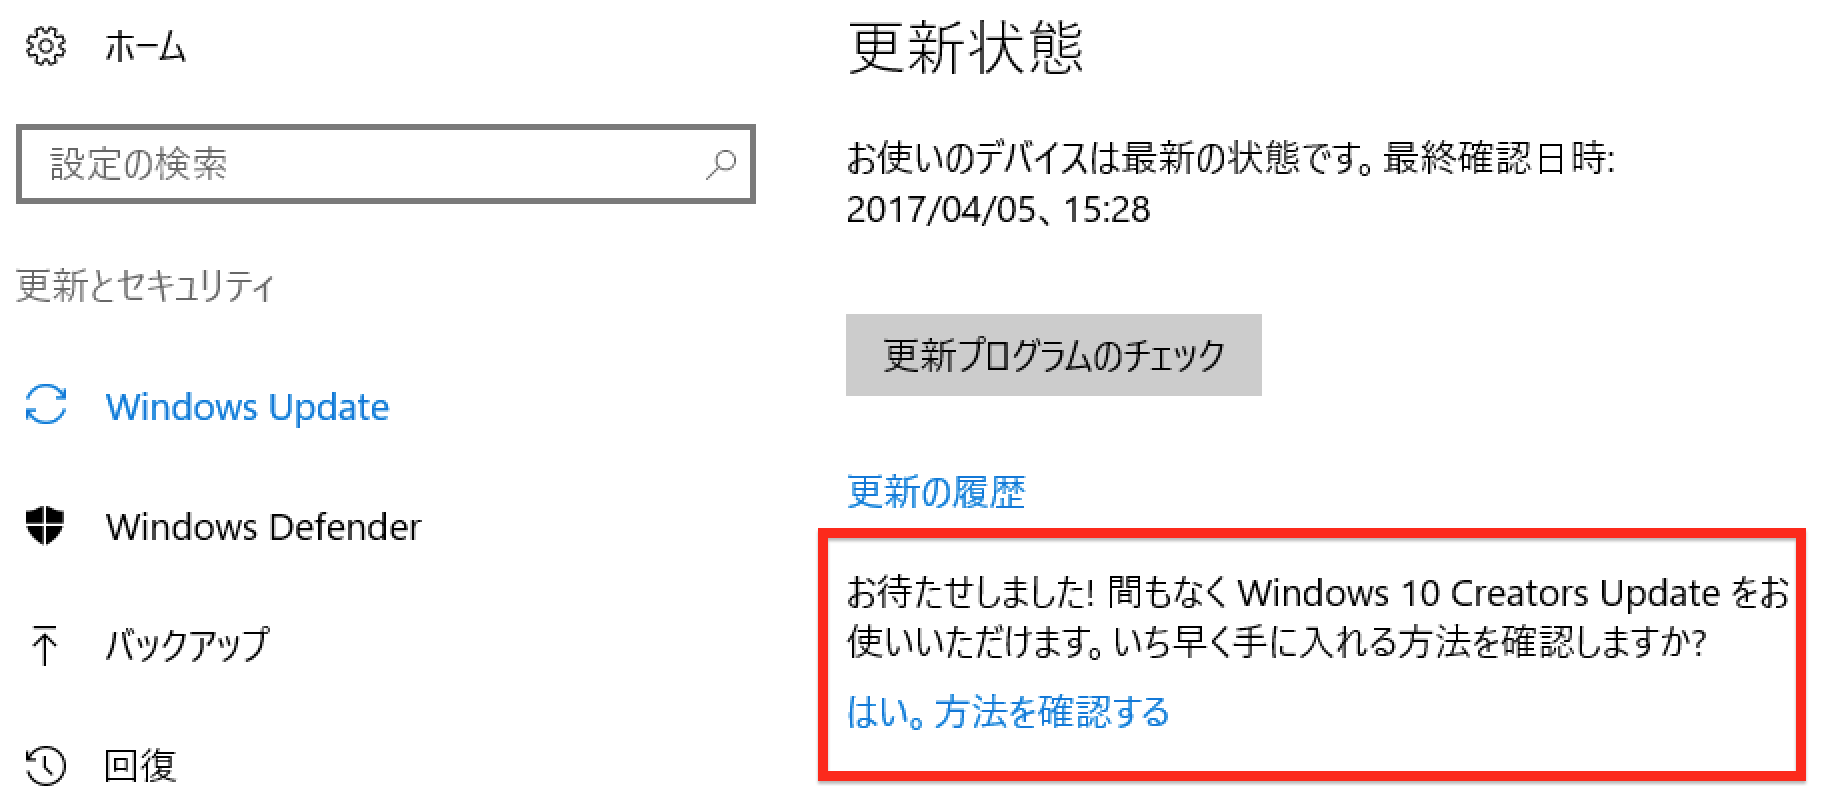 windows10-creators-update-parallels-02.png